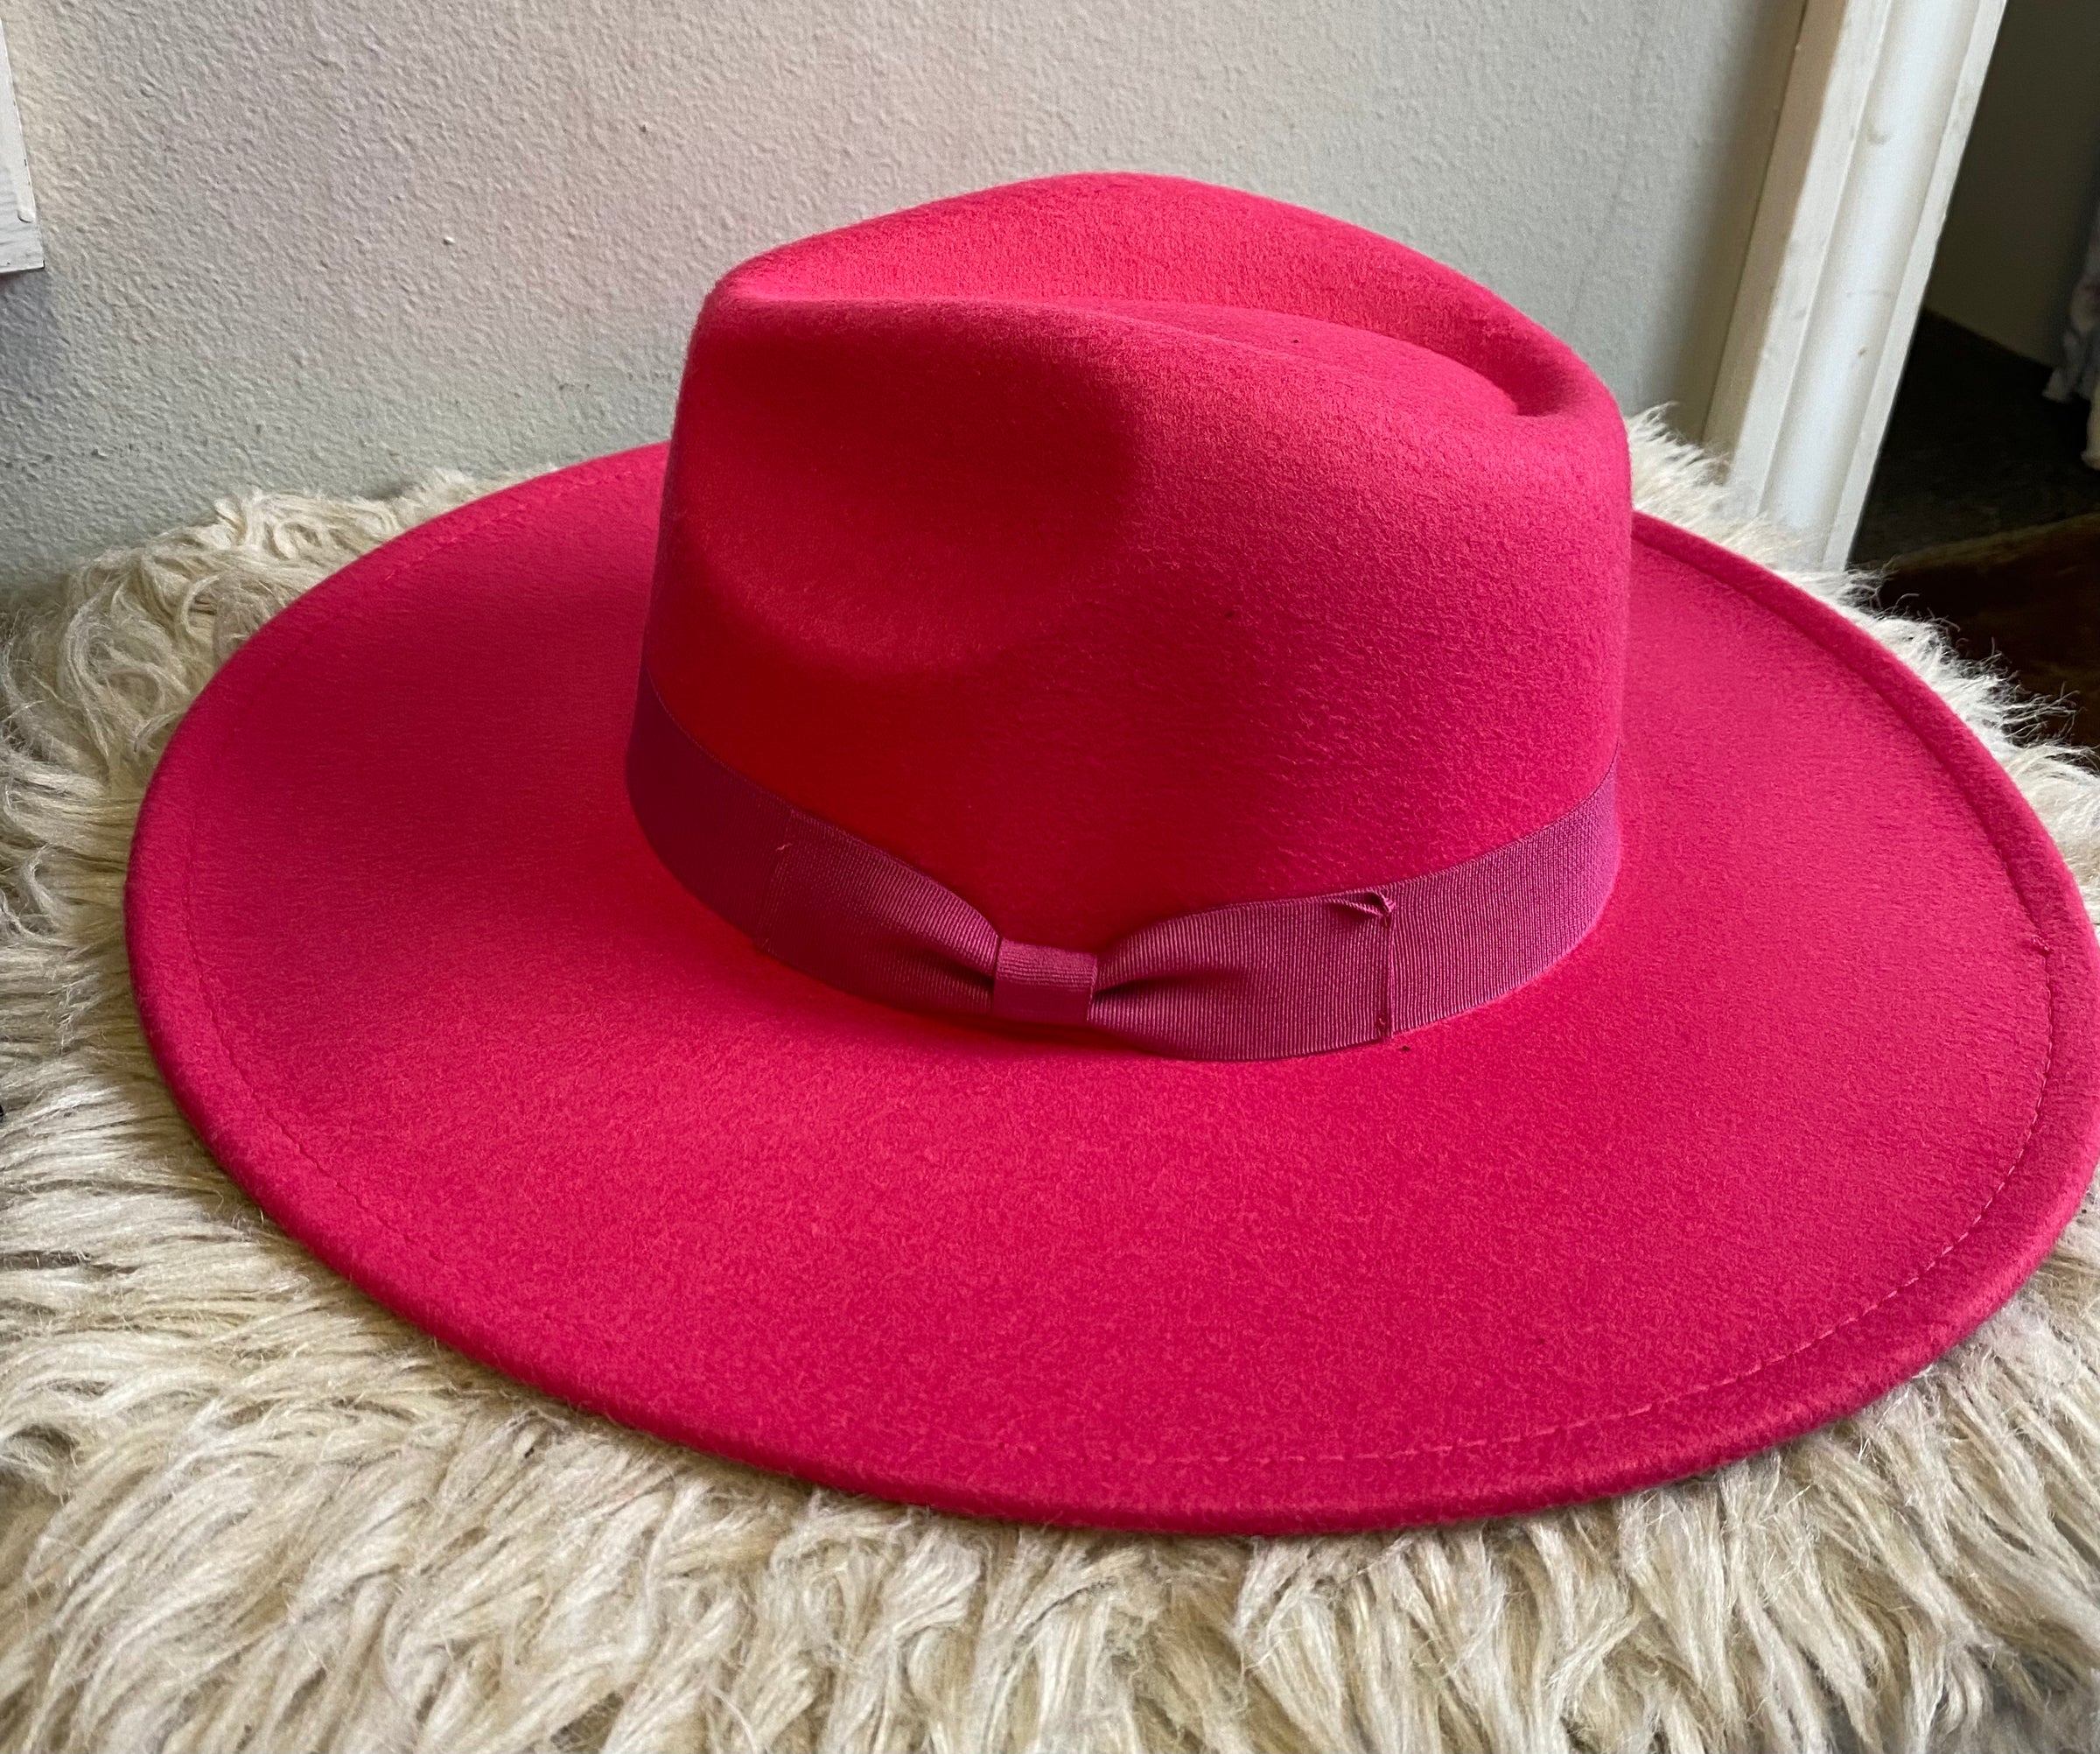 The Nashville Hat